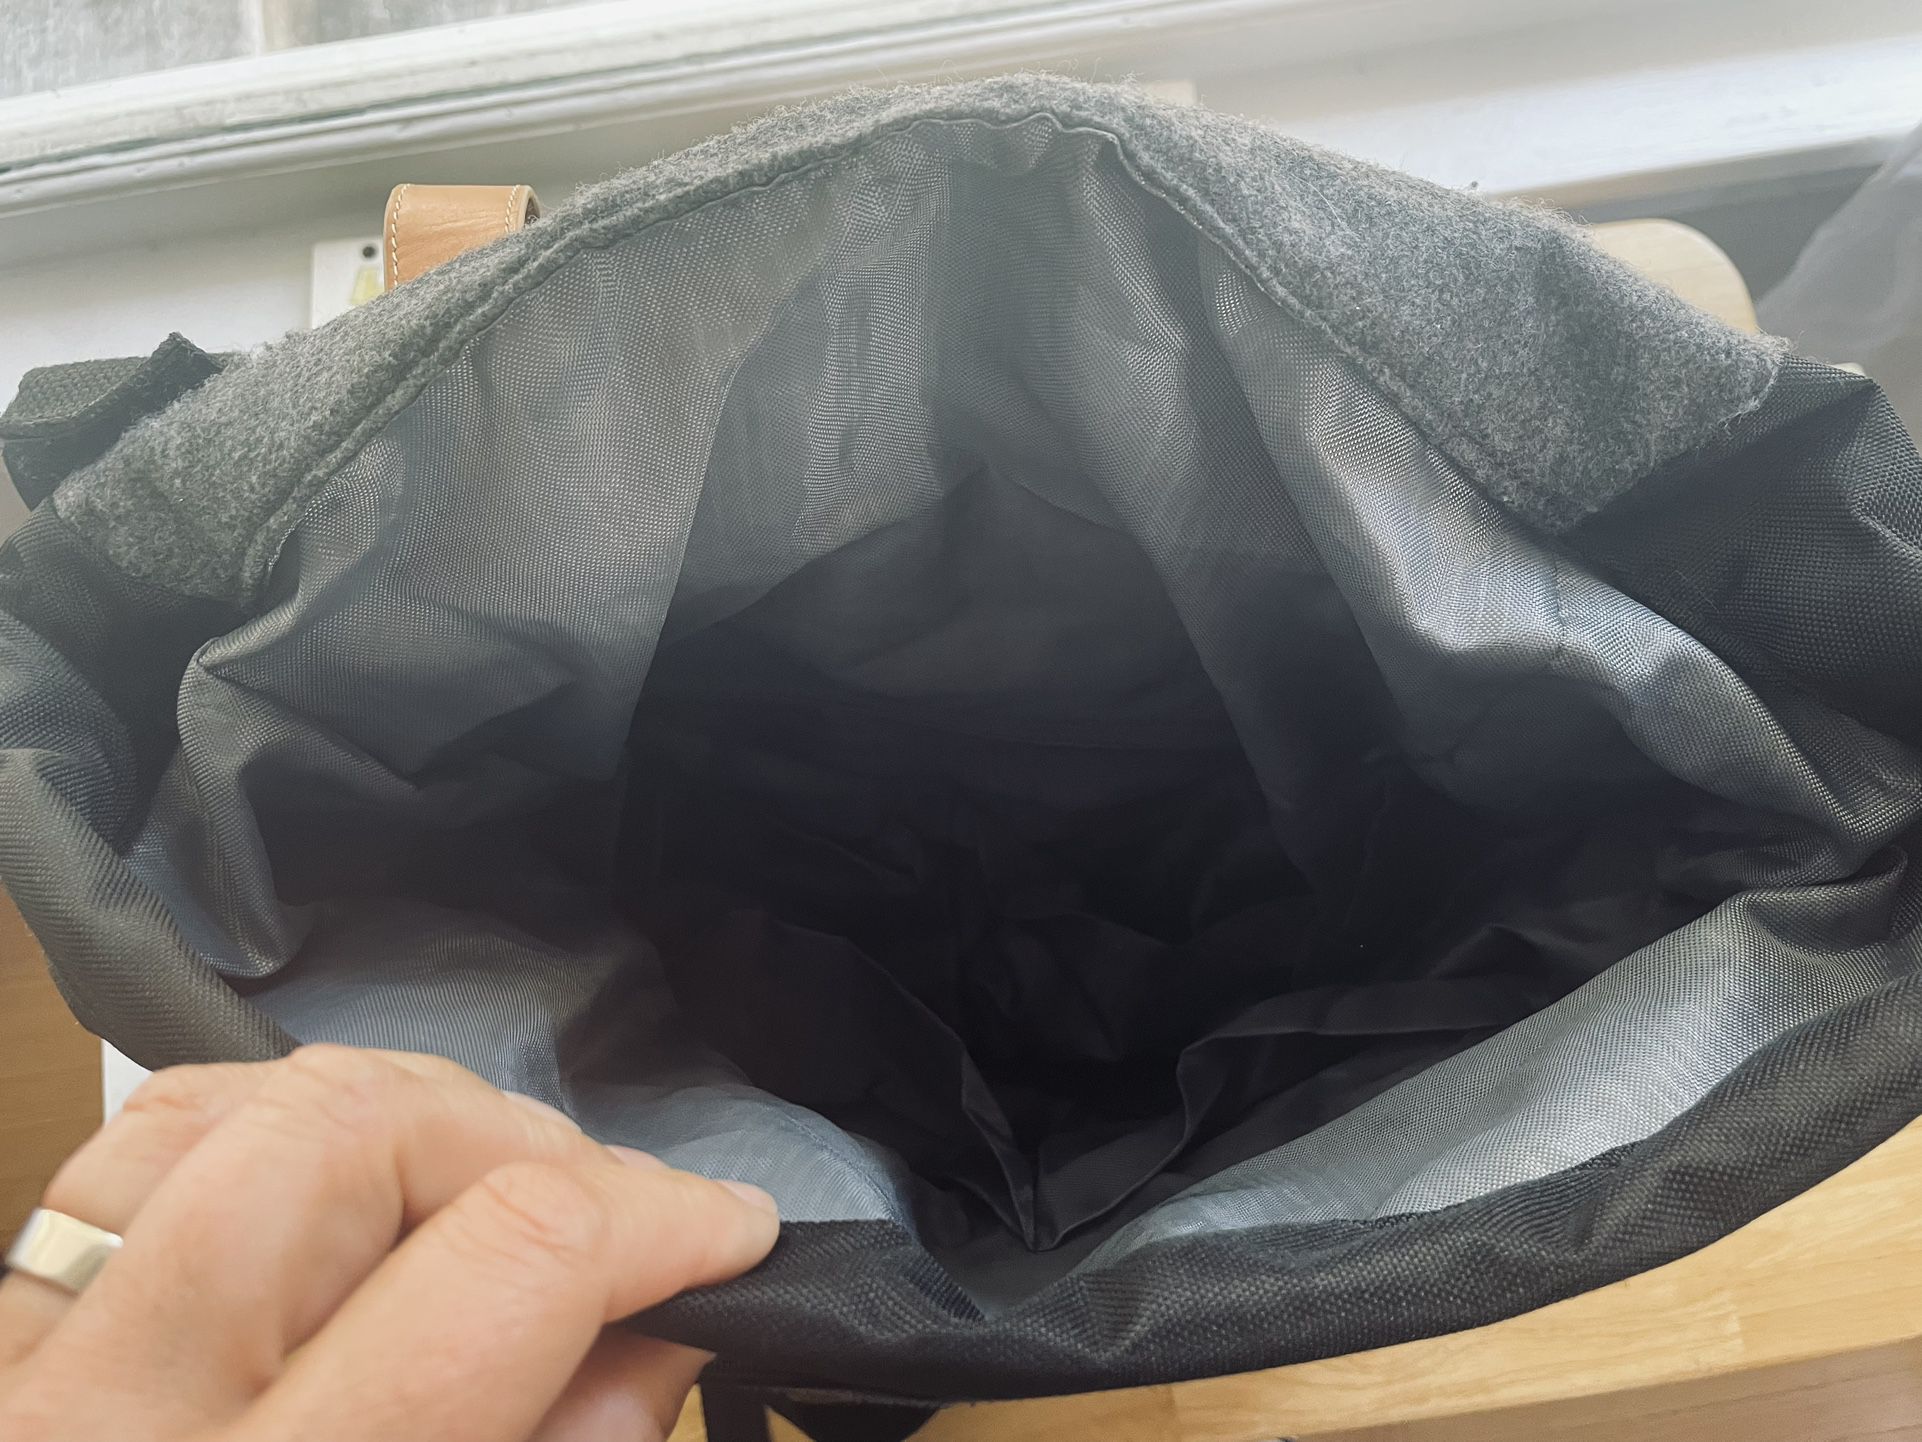 Product of The North Elkin Backpack Diaper Bag - Black